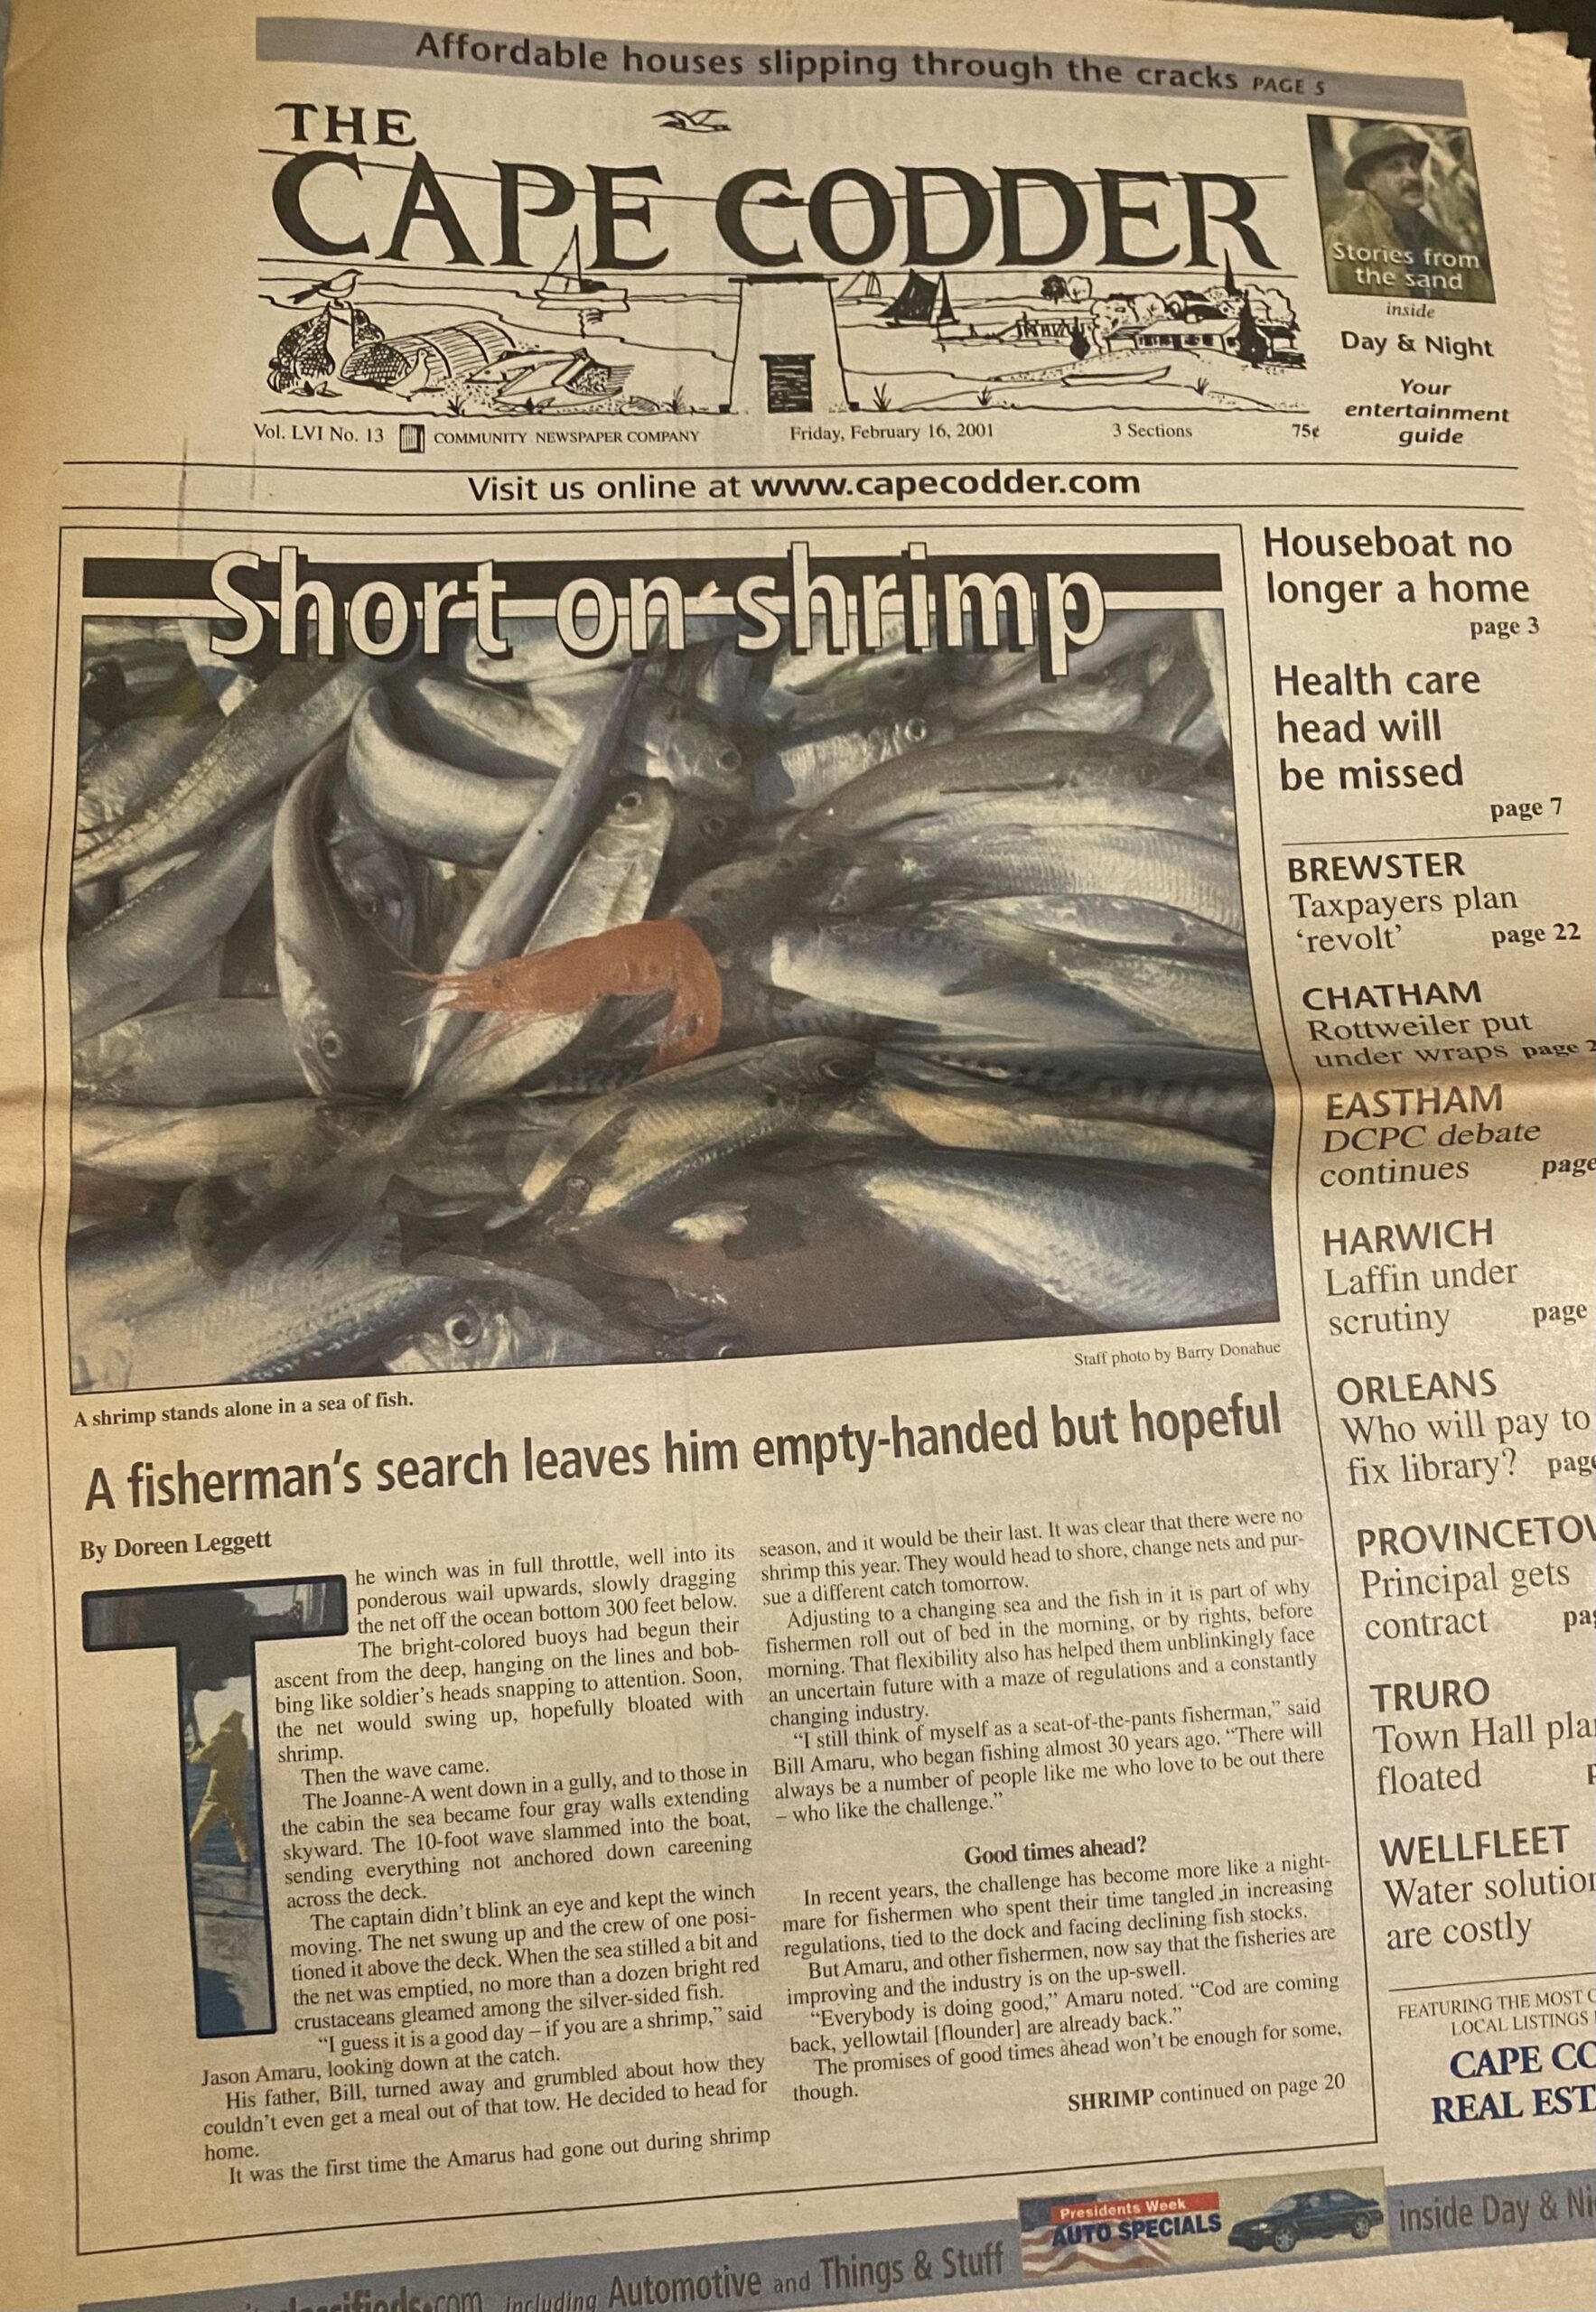 Celebrating the former Chatham Arctic shrimp fishery